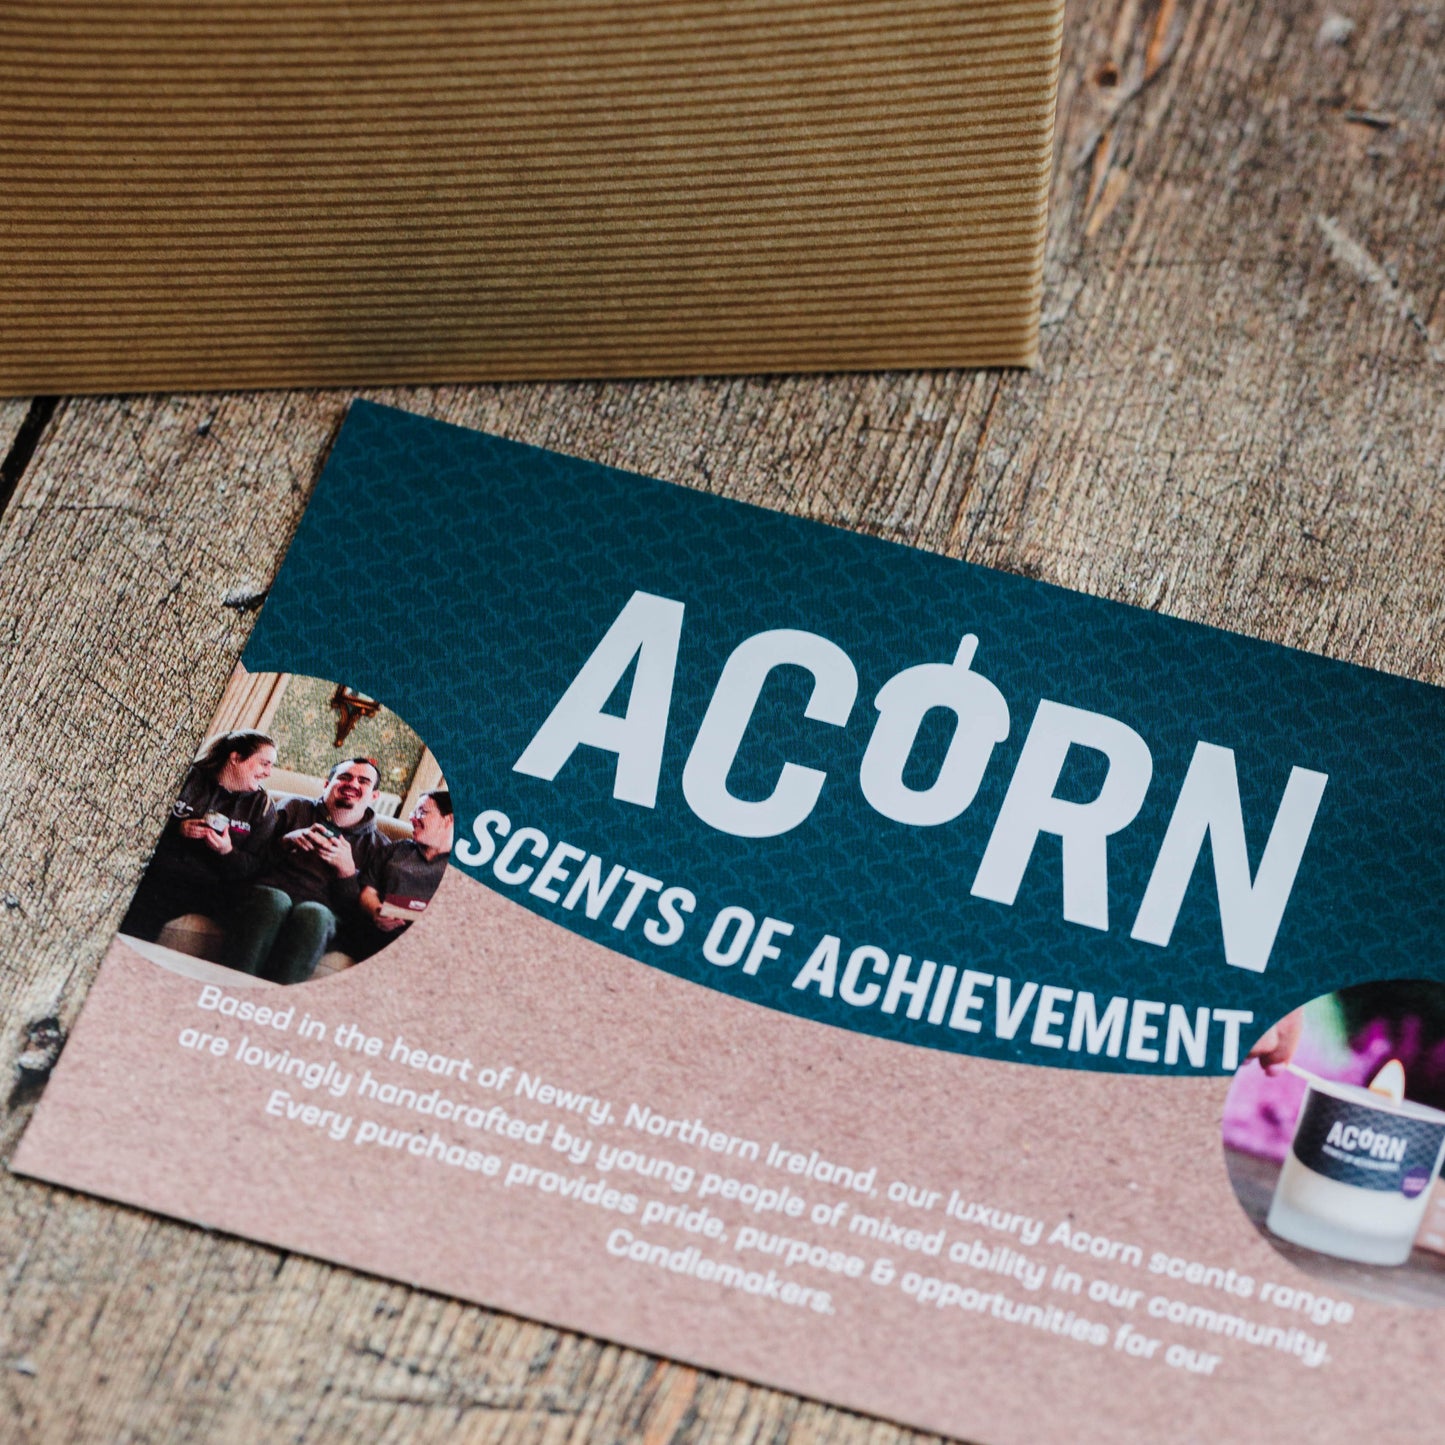 Acorn Gift Hamper - Small